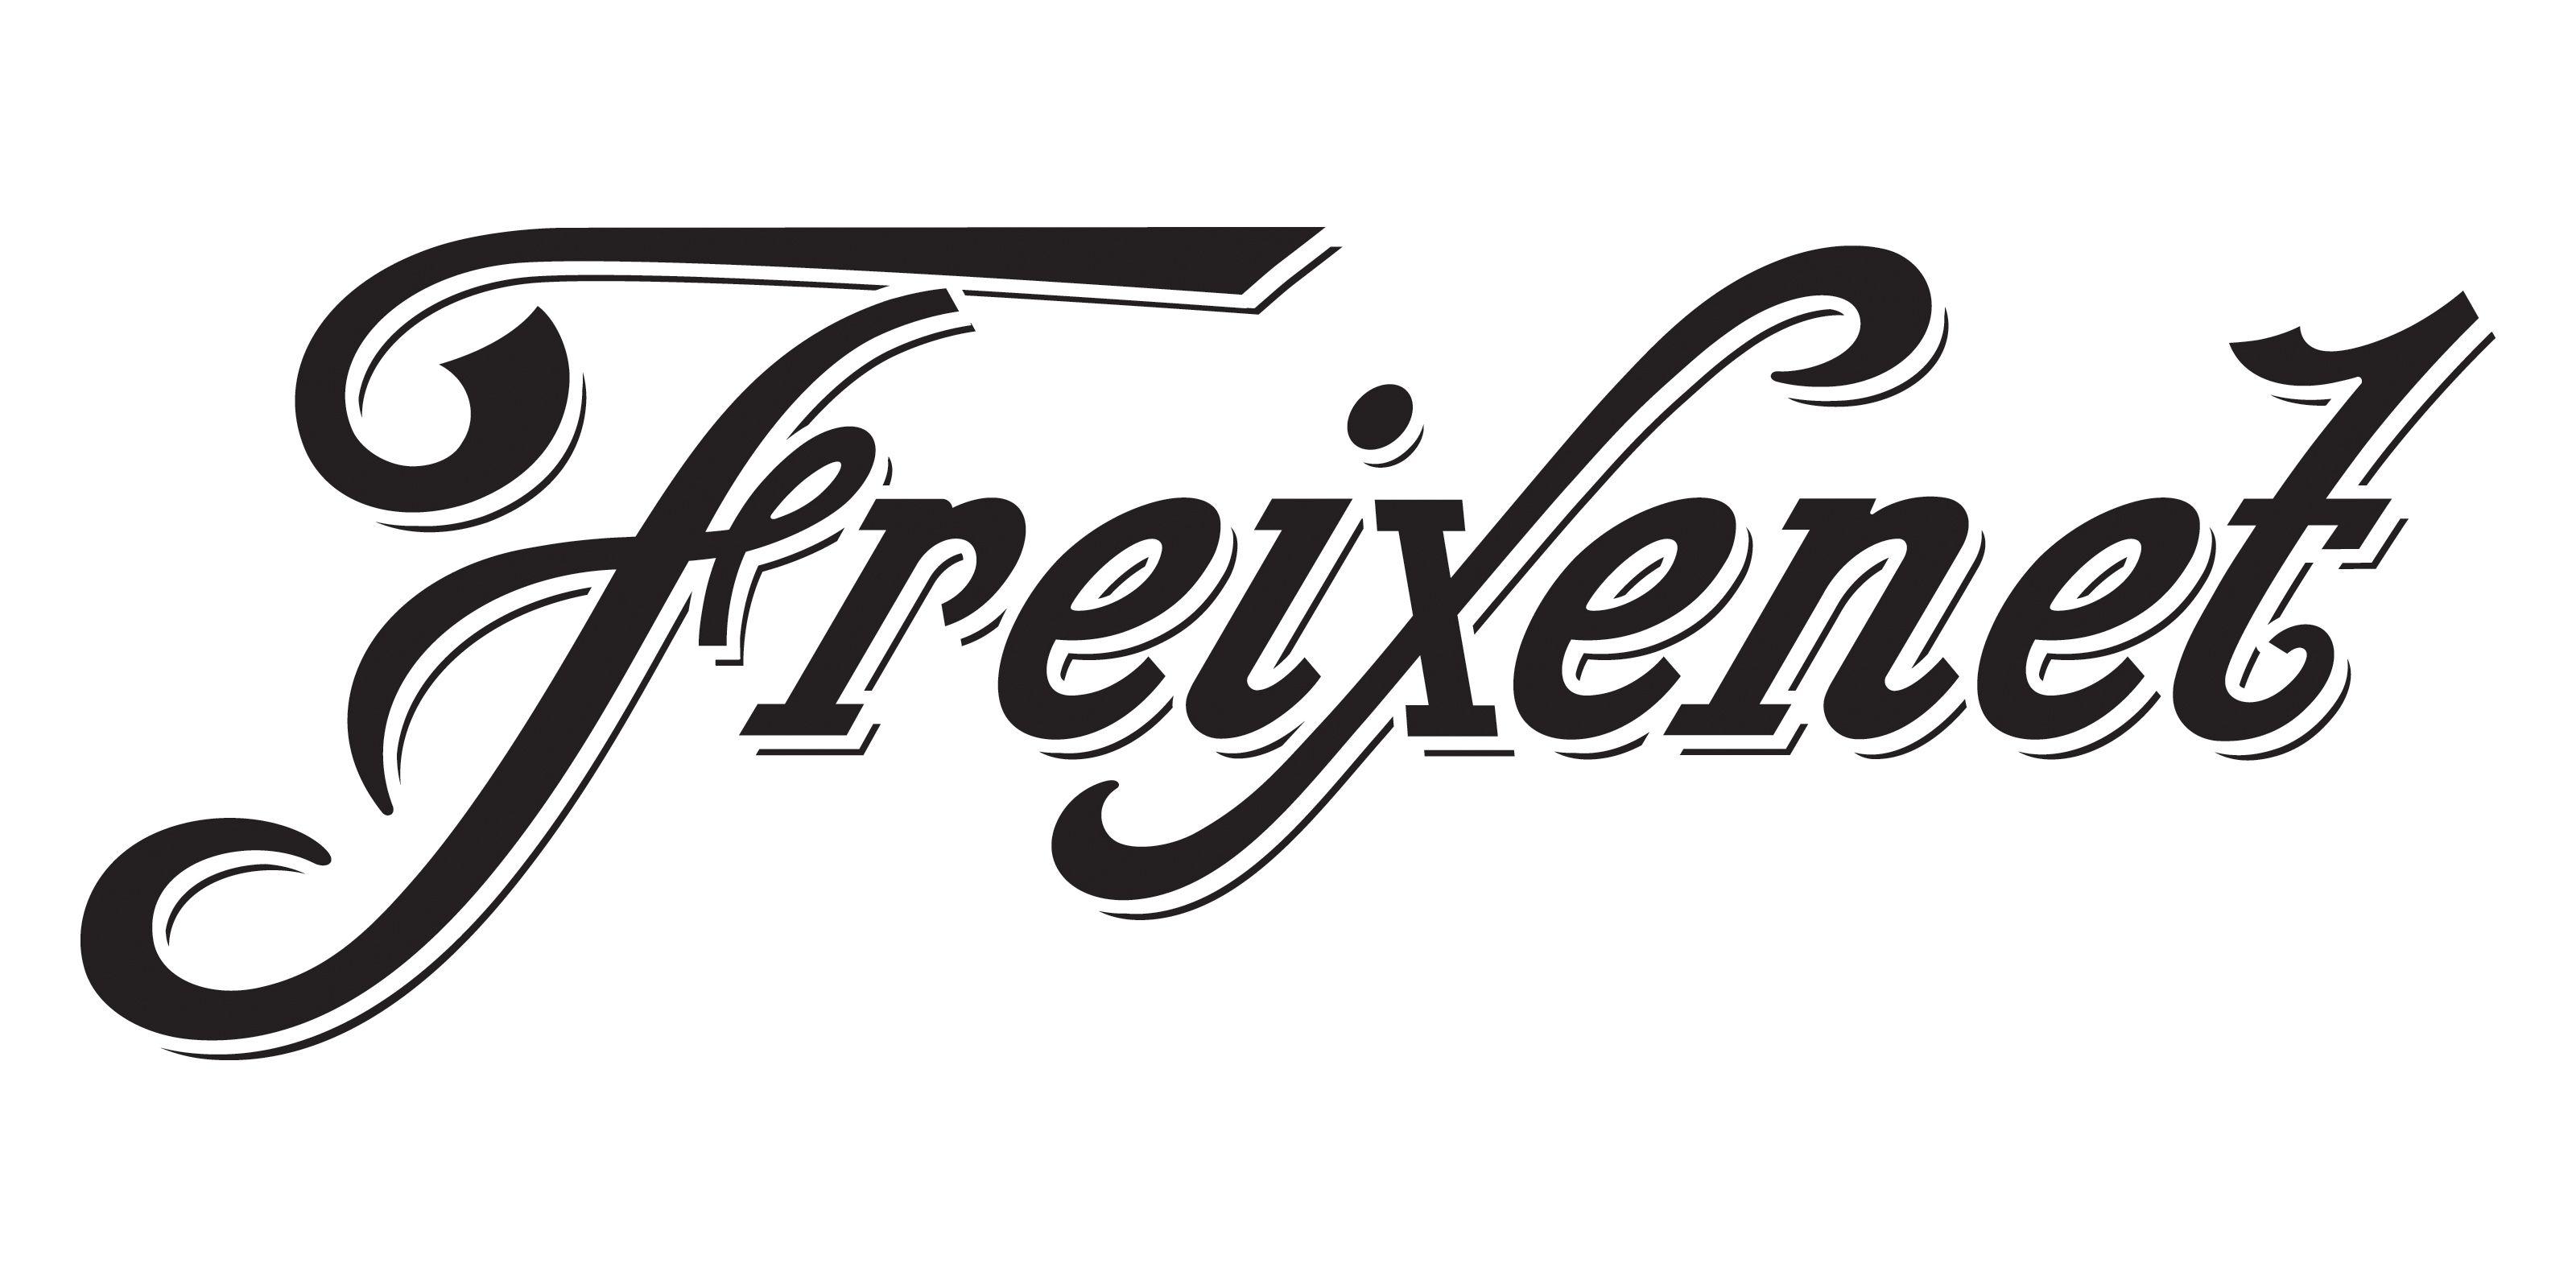 Freixenet Logo - Freixenet! | Quest for the Crest Sponsors | Pinterest | Logos, Wine ...